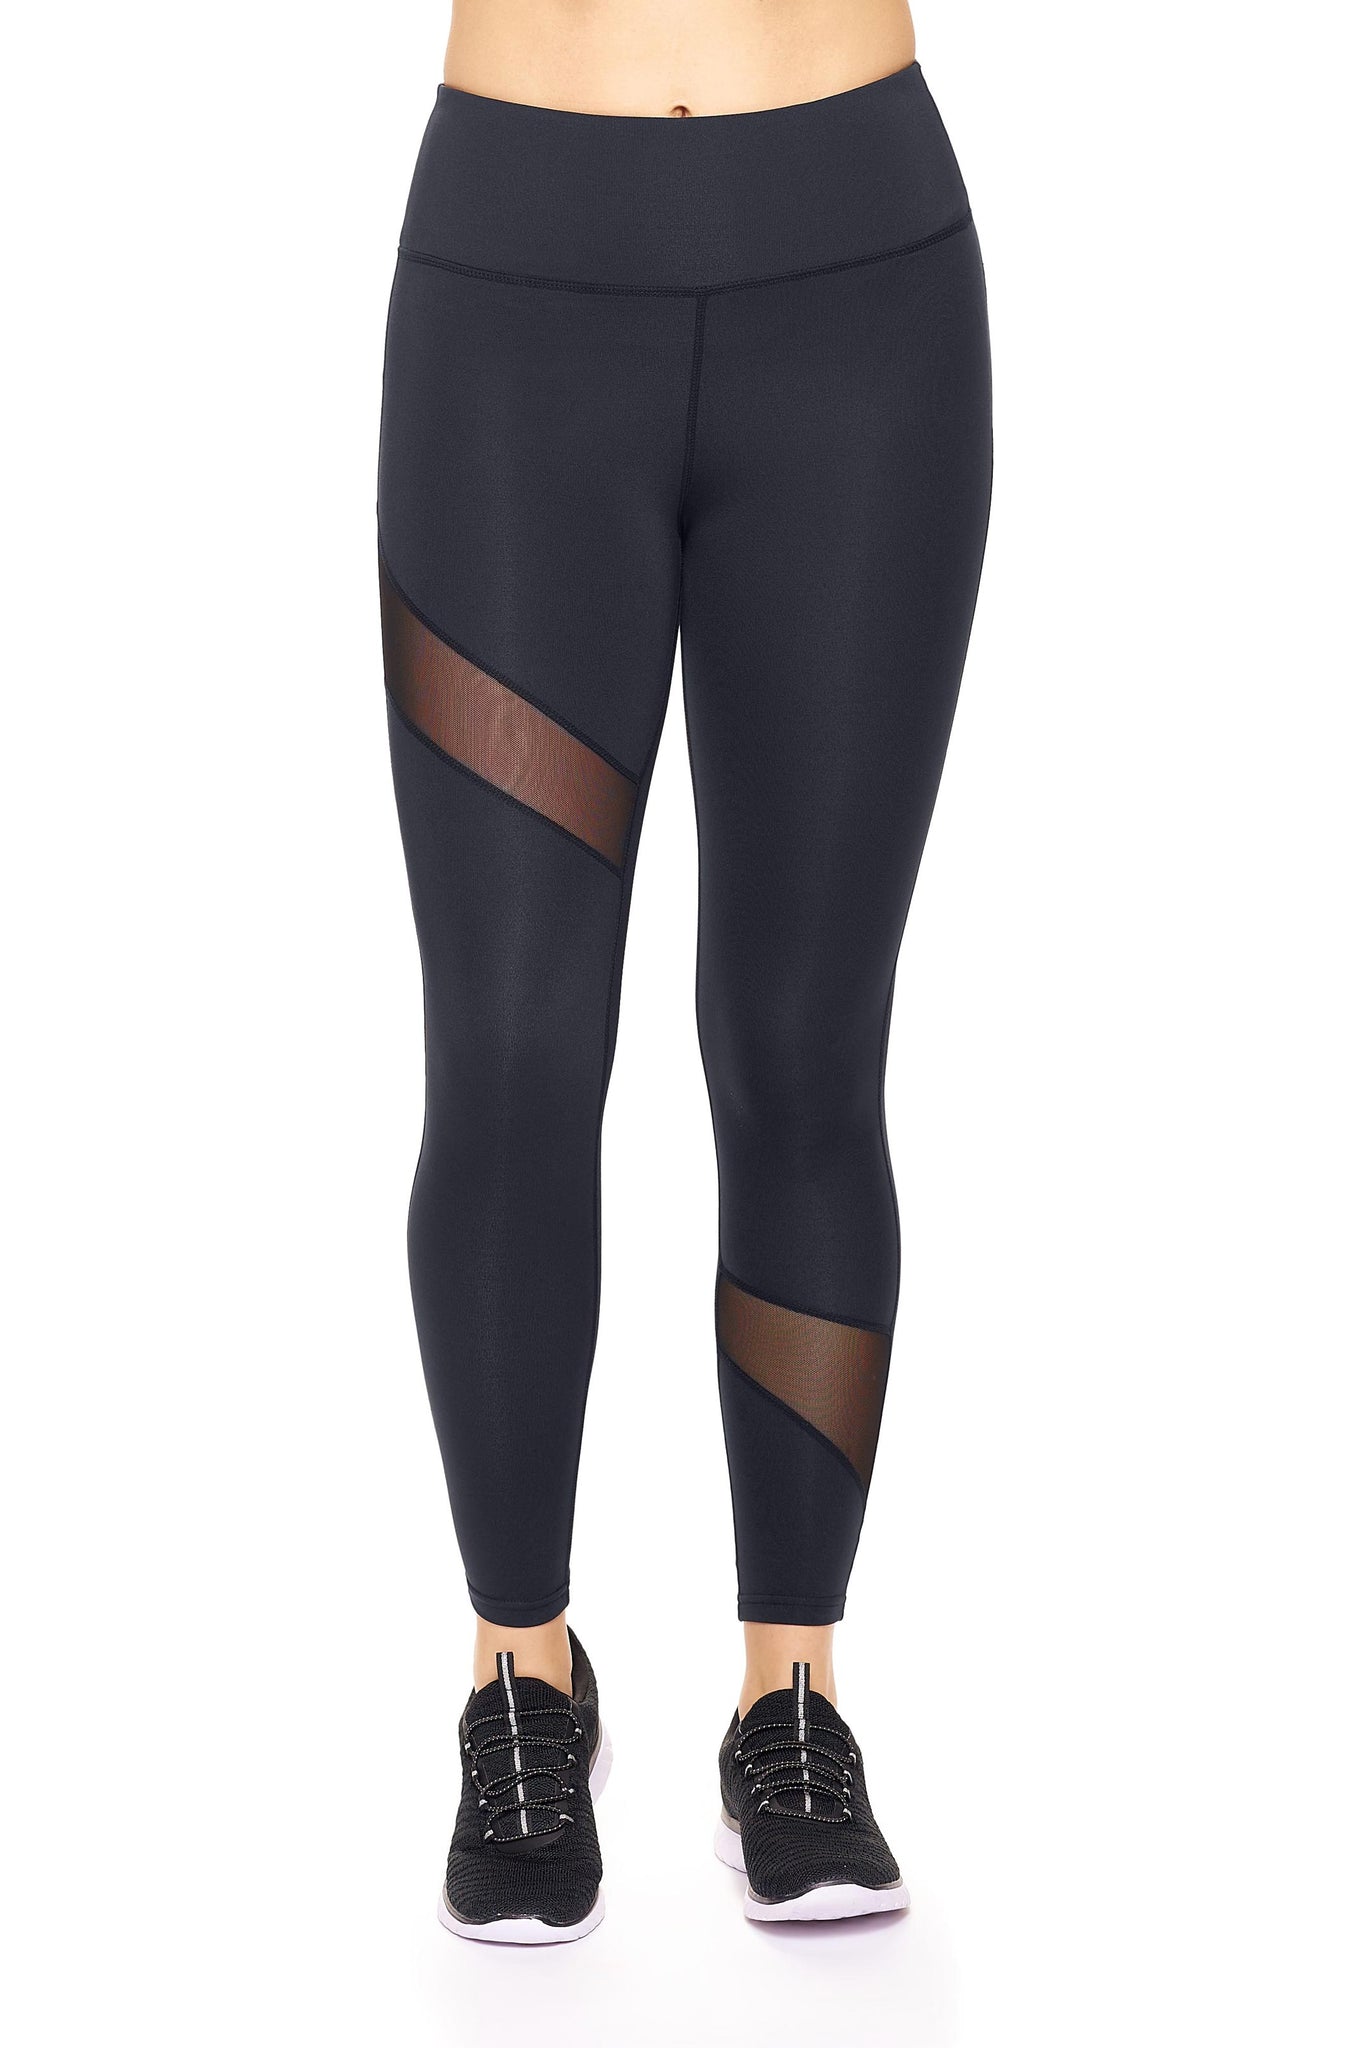 Amazon.com: Bokeley Women Yoga Pants, Clearance!Women High Waist Cutout Mesh  See-Through Sports Gym Yoga Running Fitness Leggings Pants Workout Clothes ( Black, S) : Home & Kitchen